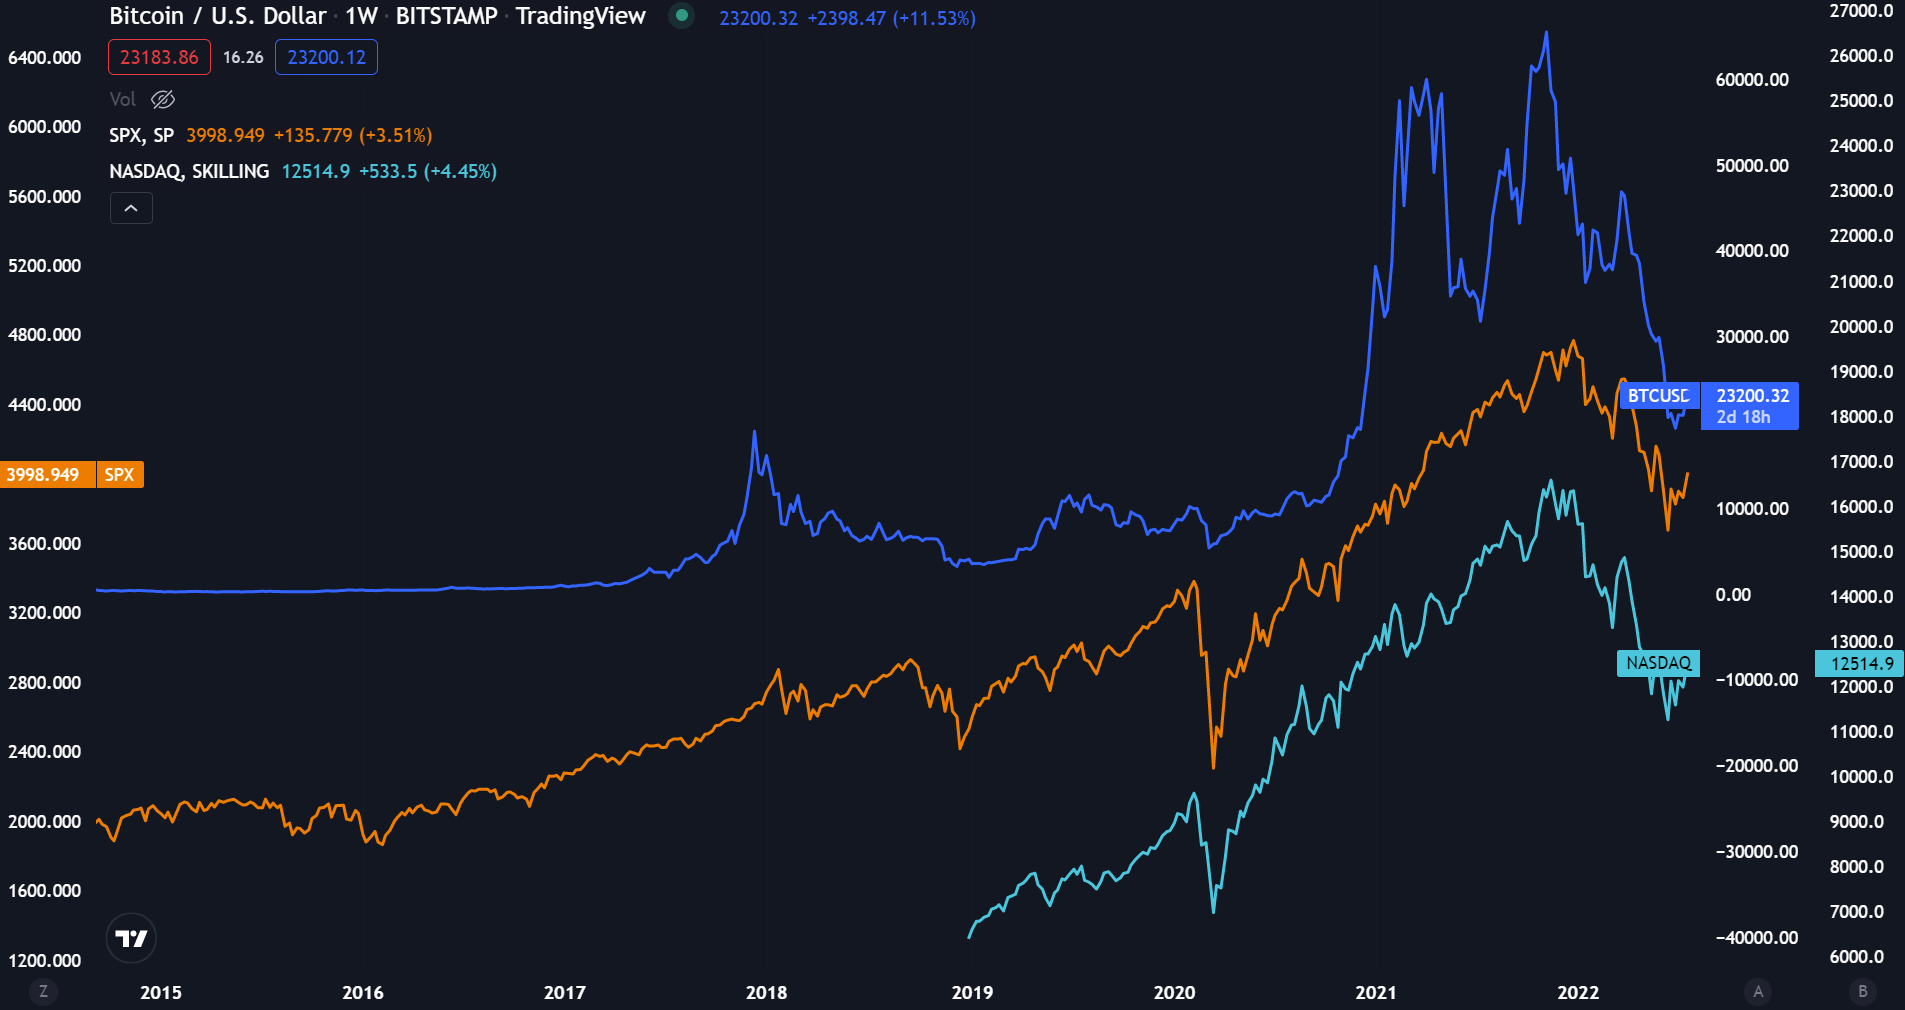 BTC/USD vs DXY chart showing correlation